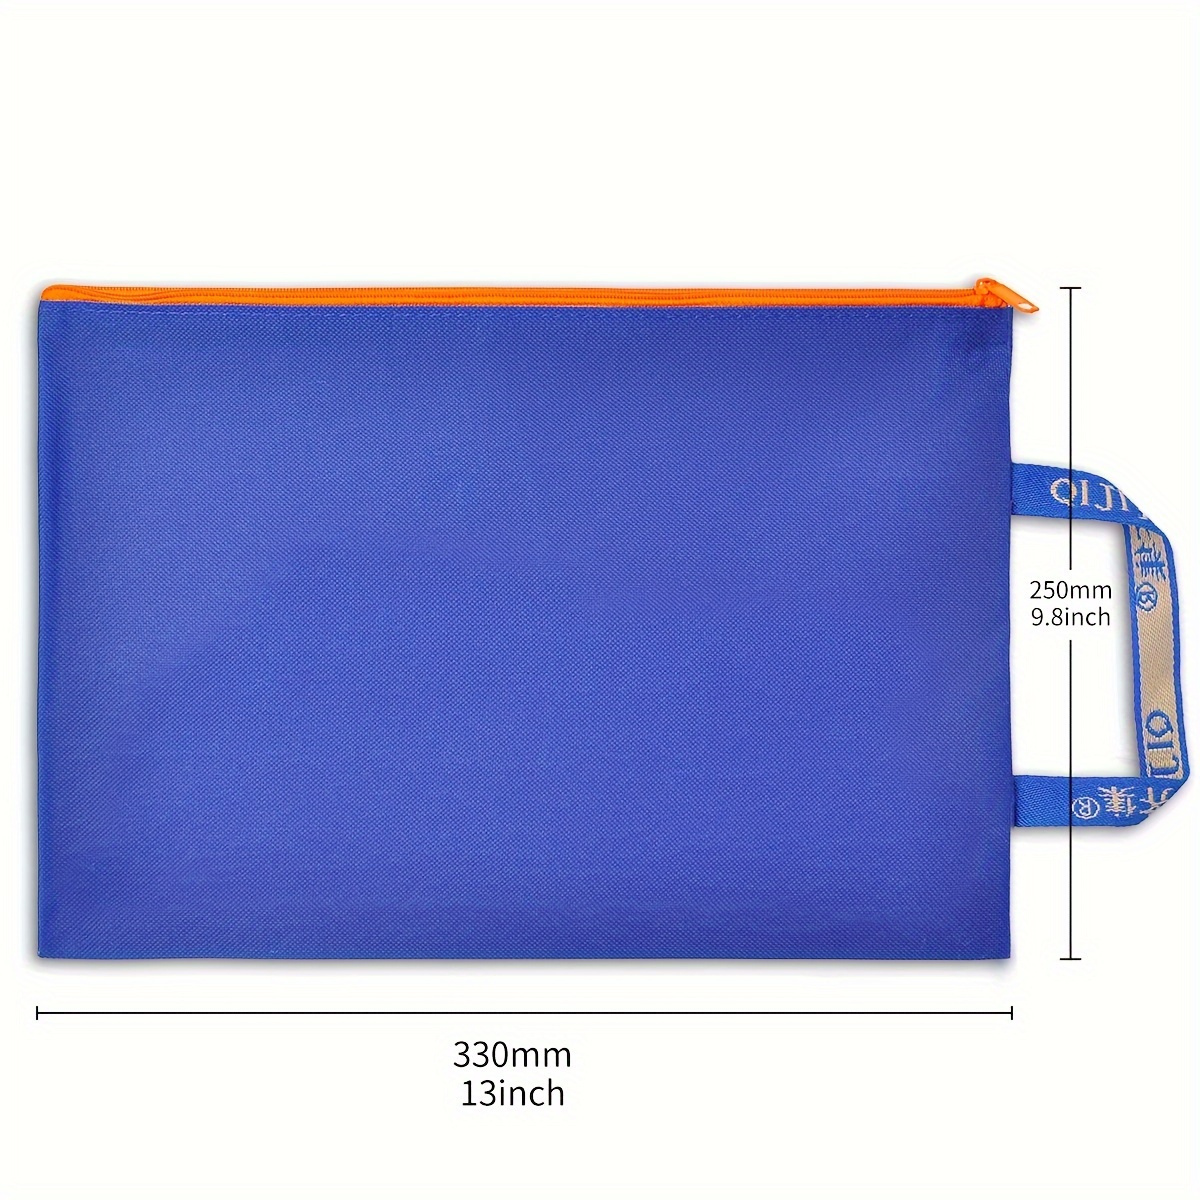 Green Canvas Zipper Bag, A4 Size Large Capacity File Bag